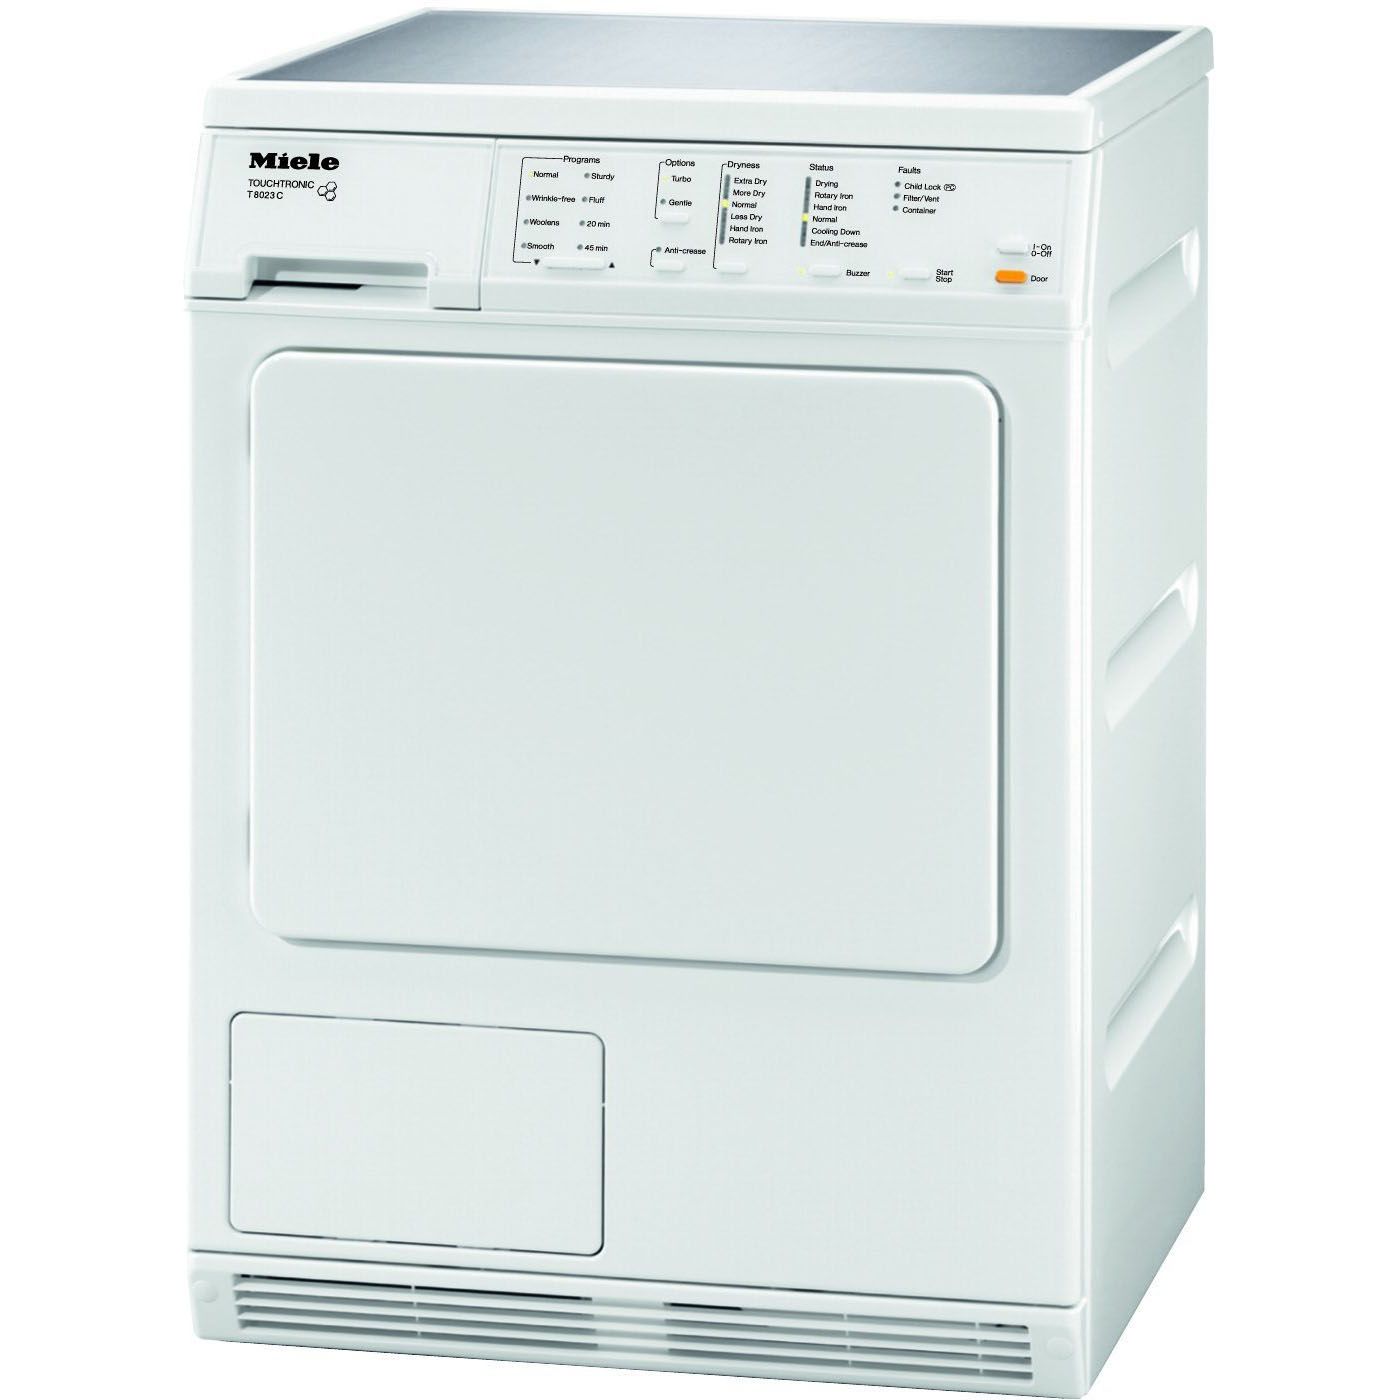 Miele Condenser Tumble Dryer, T8023C Price, Features